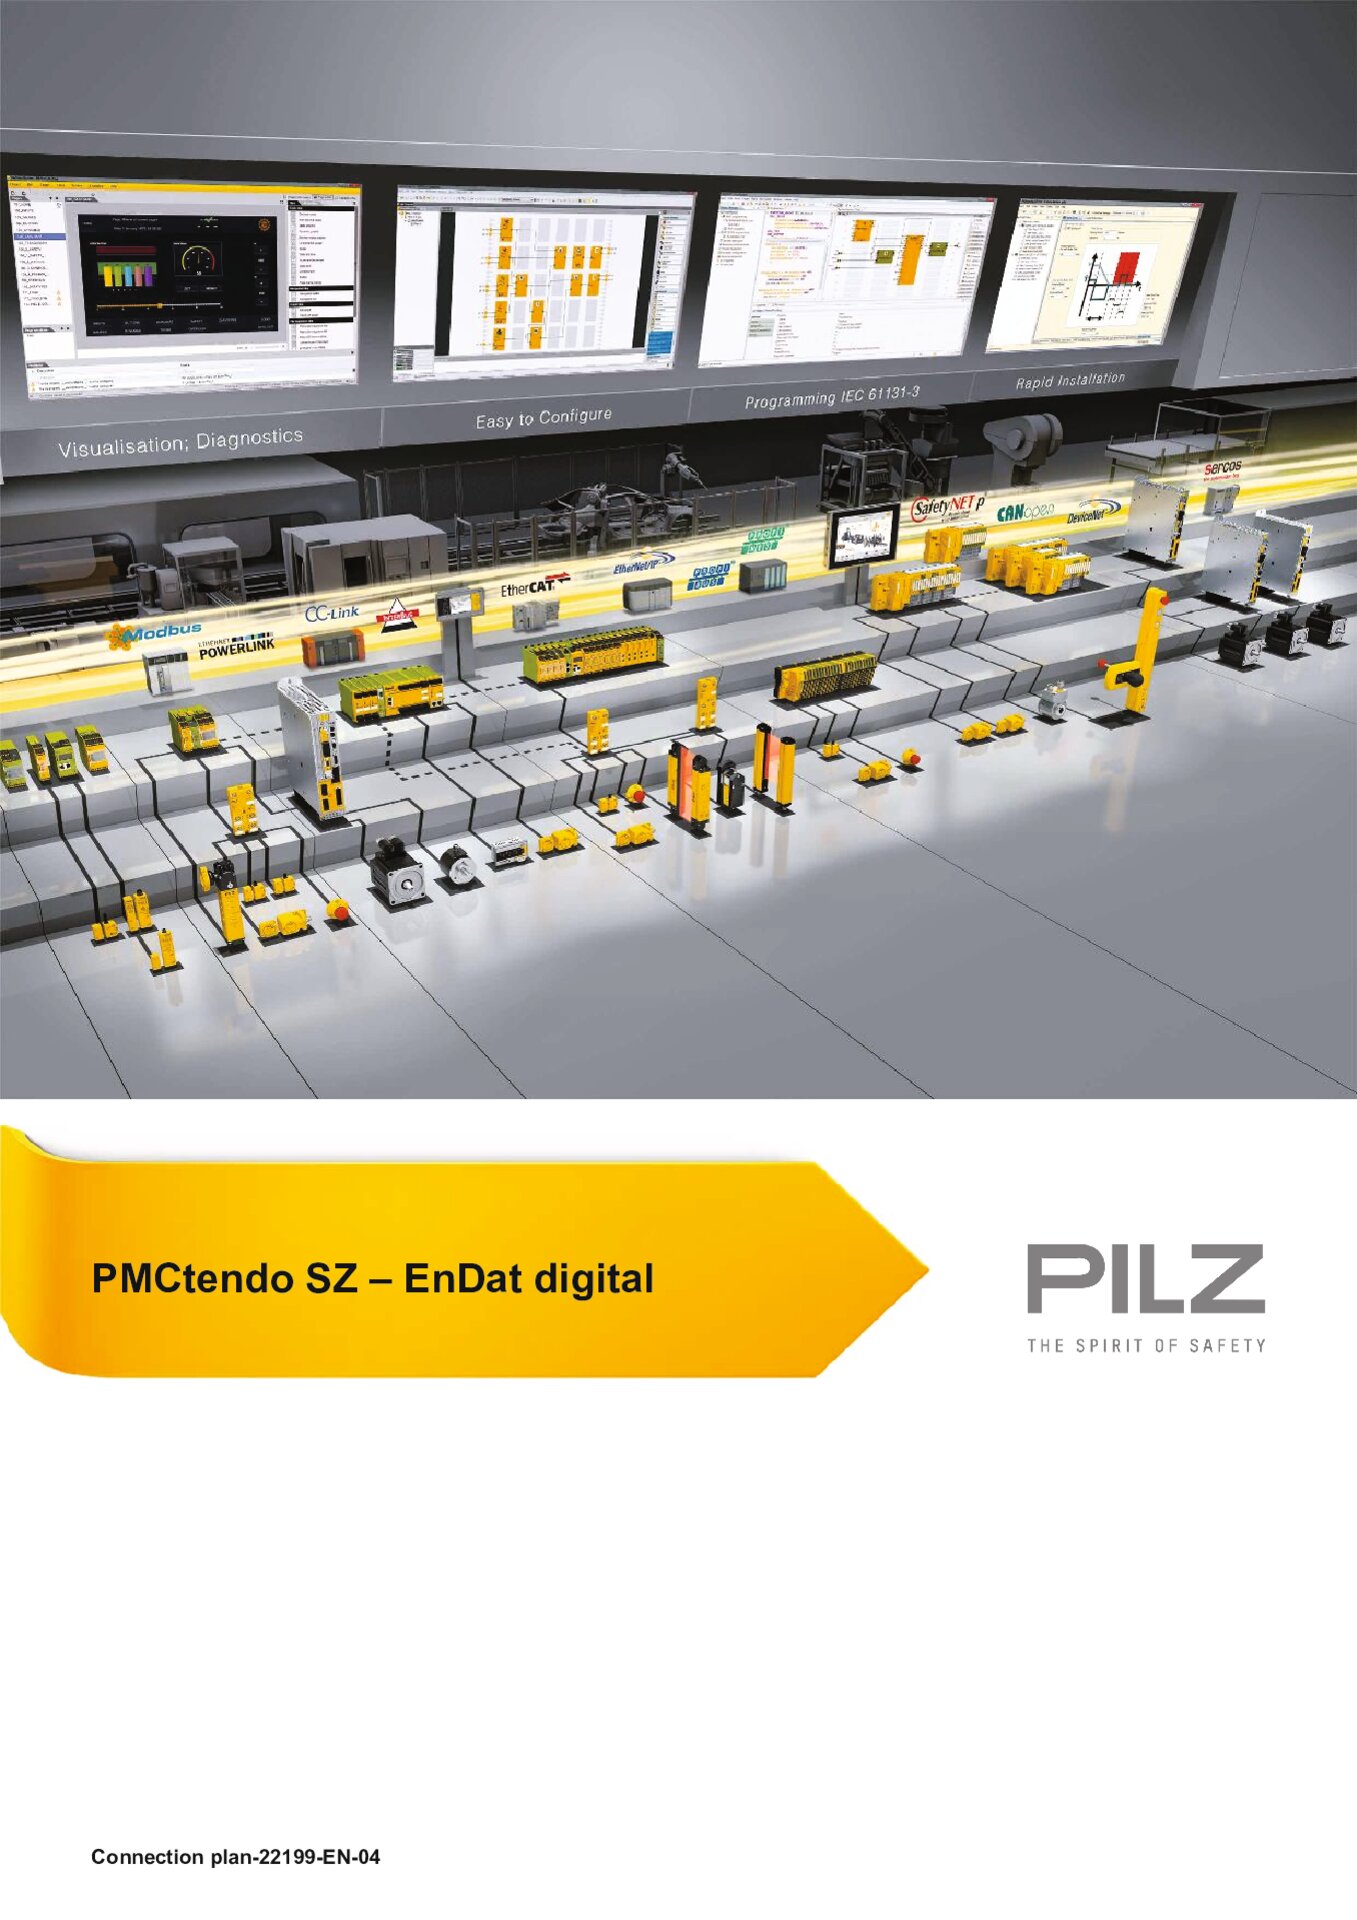 Anschlussplan PMCtendo SZ Feedback digital (Pilz ID 22199-EN-04)Connection plan PMCtendo SZ Feedback digital (Pilz ID 22199-EN-04)